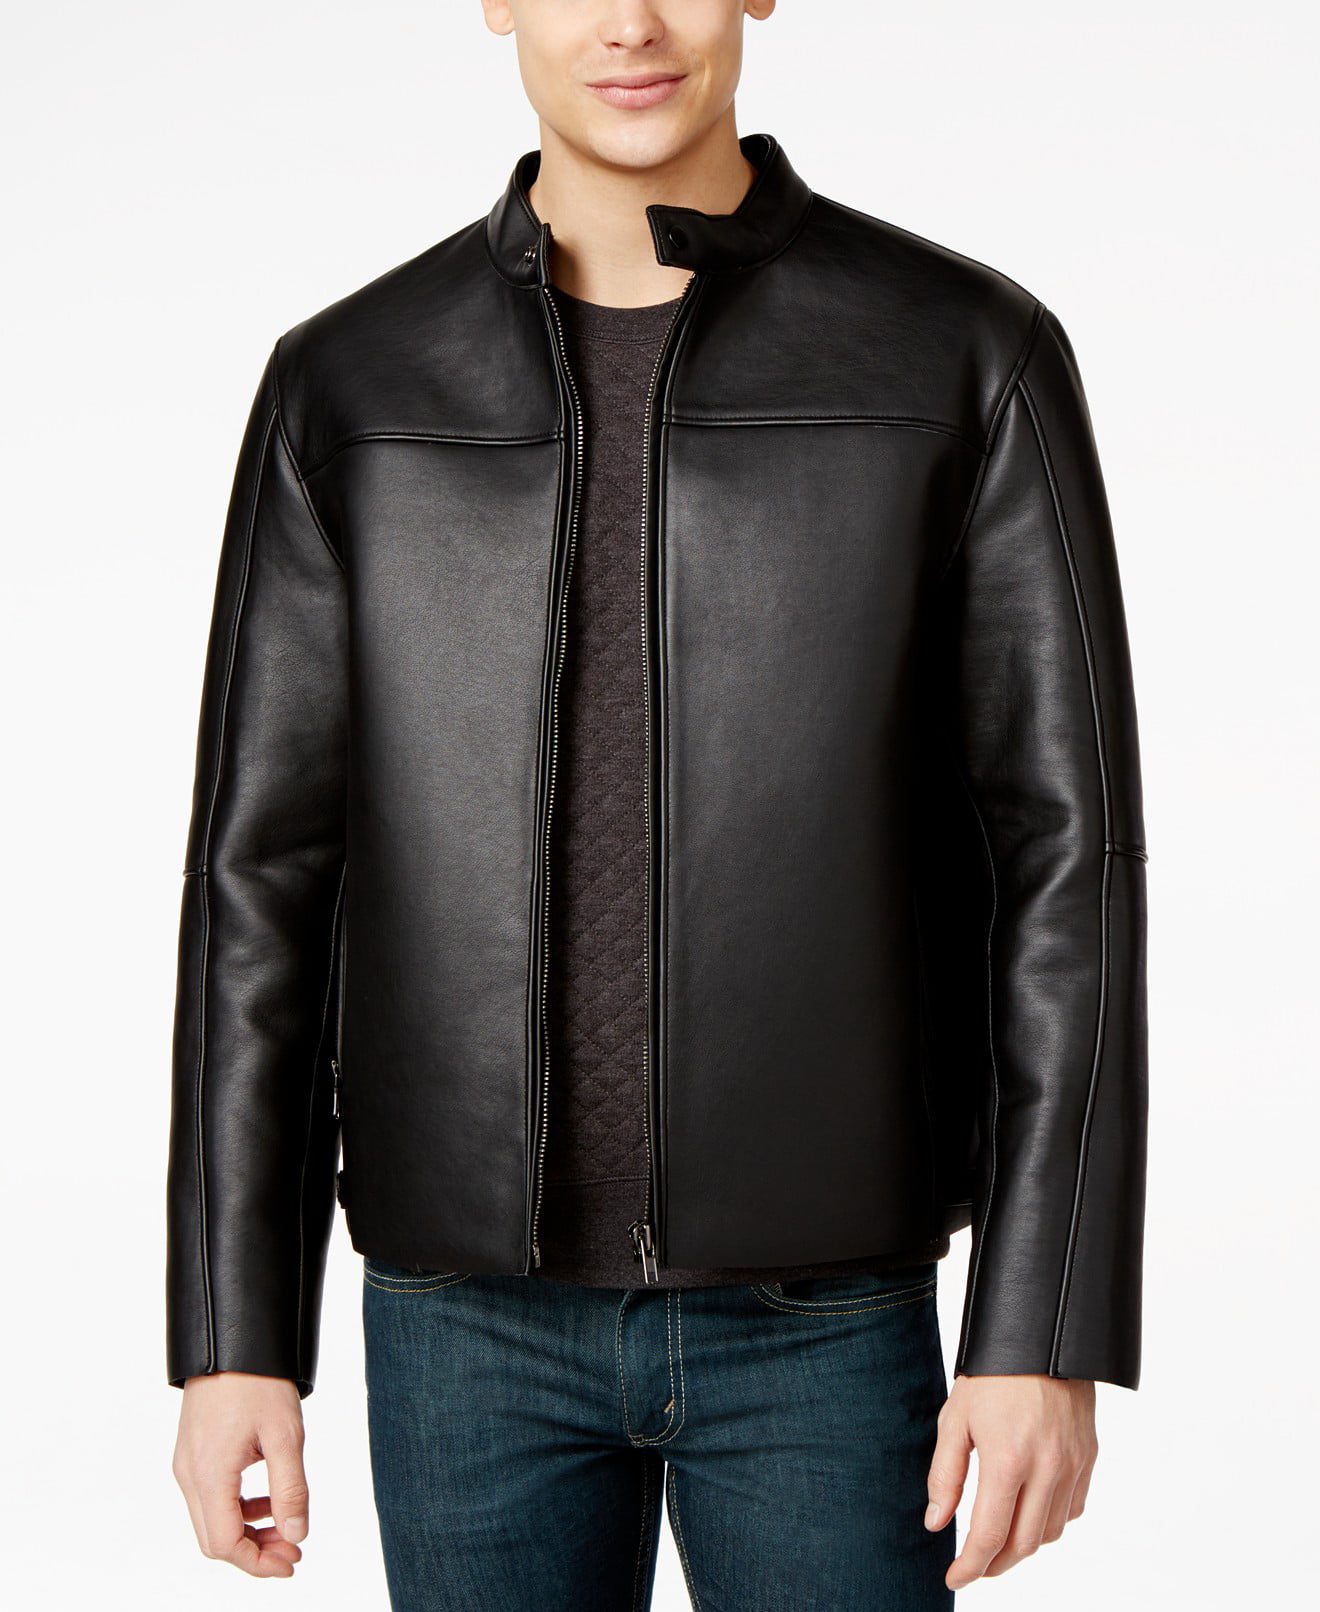 949+ Leather Jacket Mockup Easy to Edit